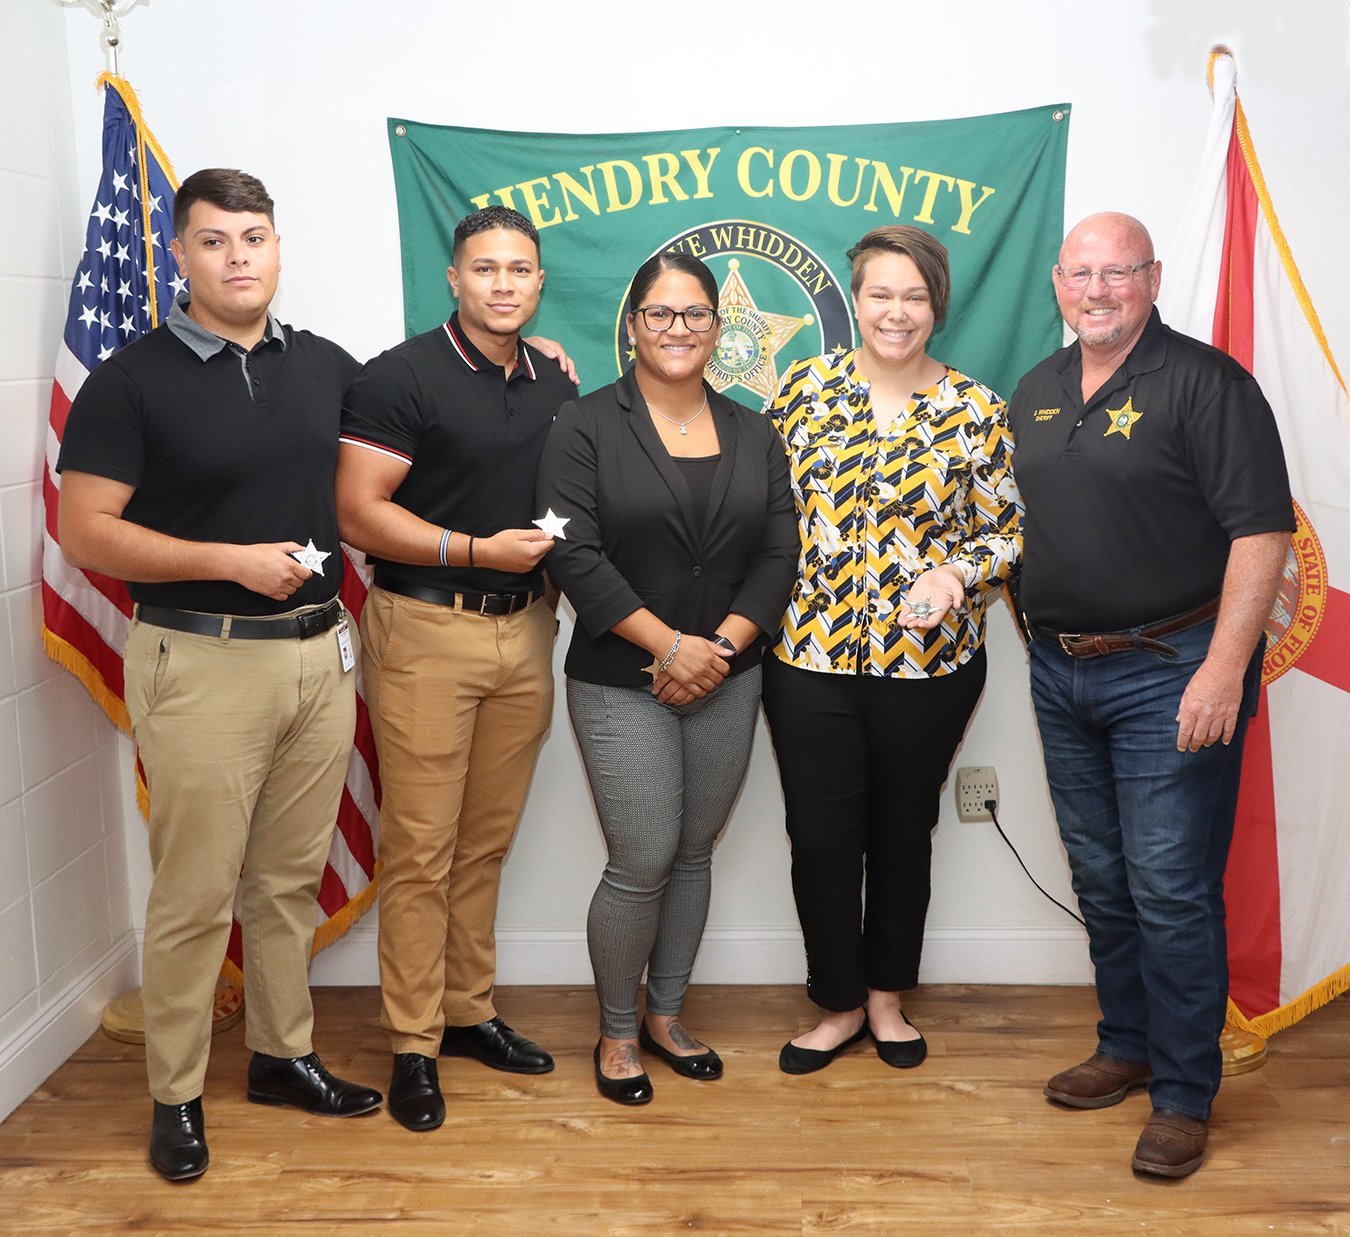 L-R Hendry County Sheriff's Office Deputy Hernan Ramirez Garcia, Deputy Larry Rodriguez, Deputy Dayana Calvo Driggs, Deputy Isabel Rodriguez and Sheriff Steve Whidden.